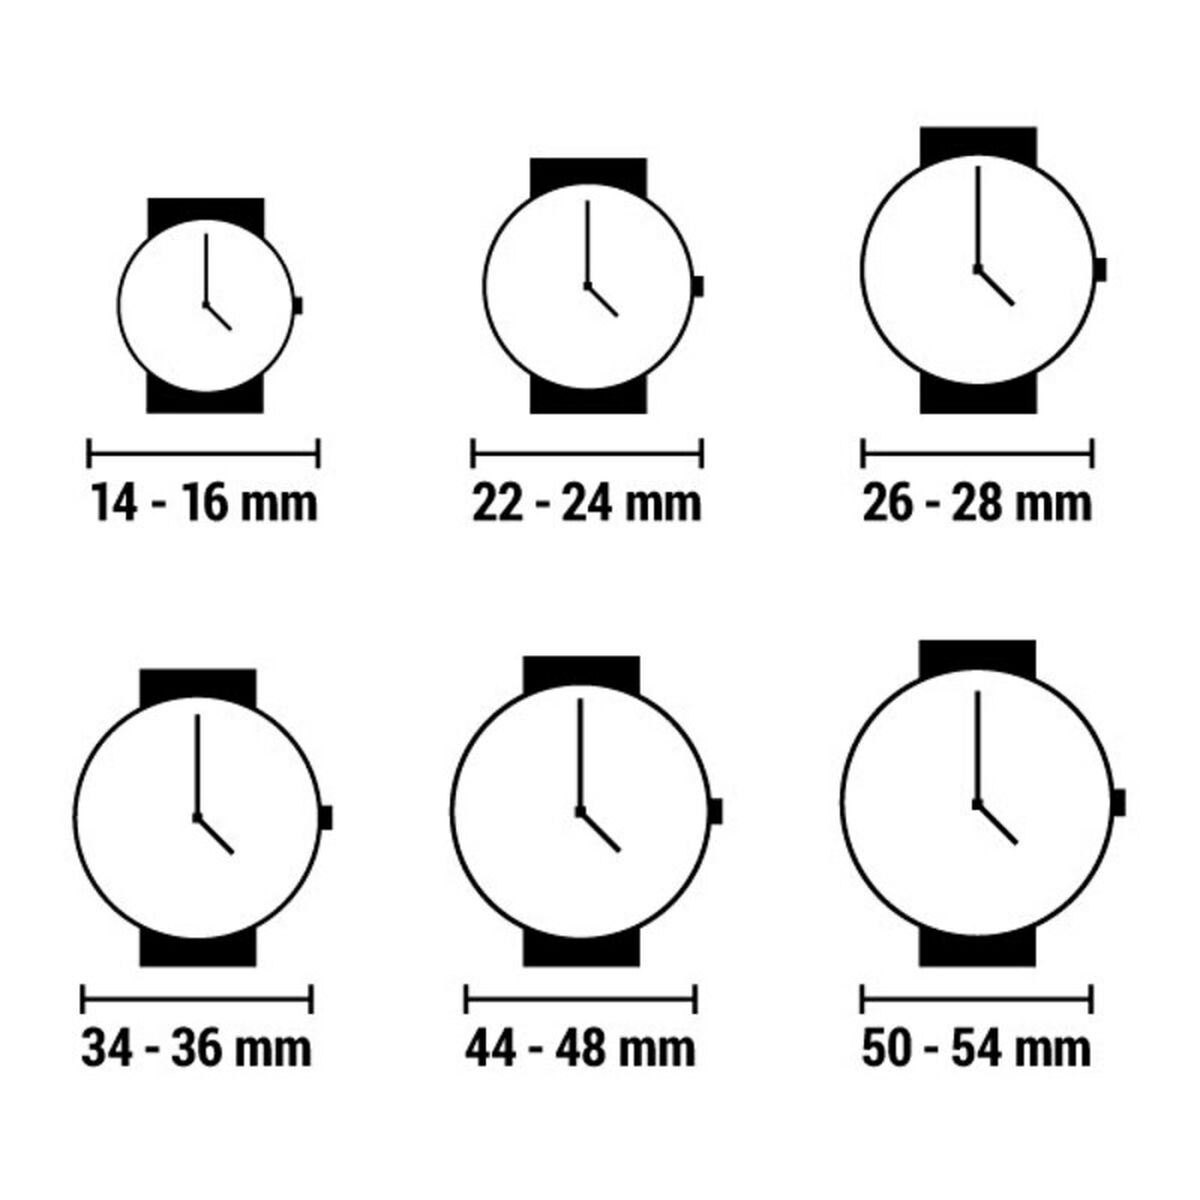 Horloge Dames Komono KOM-W2803 (Ø 36 mm)